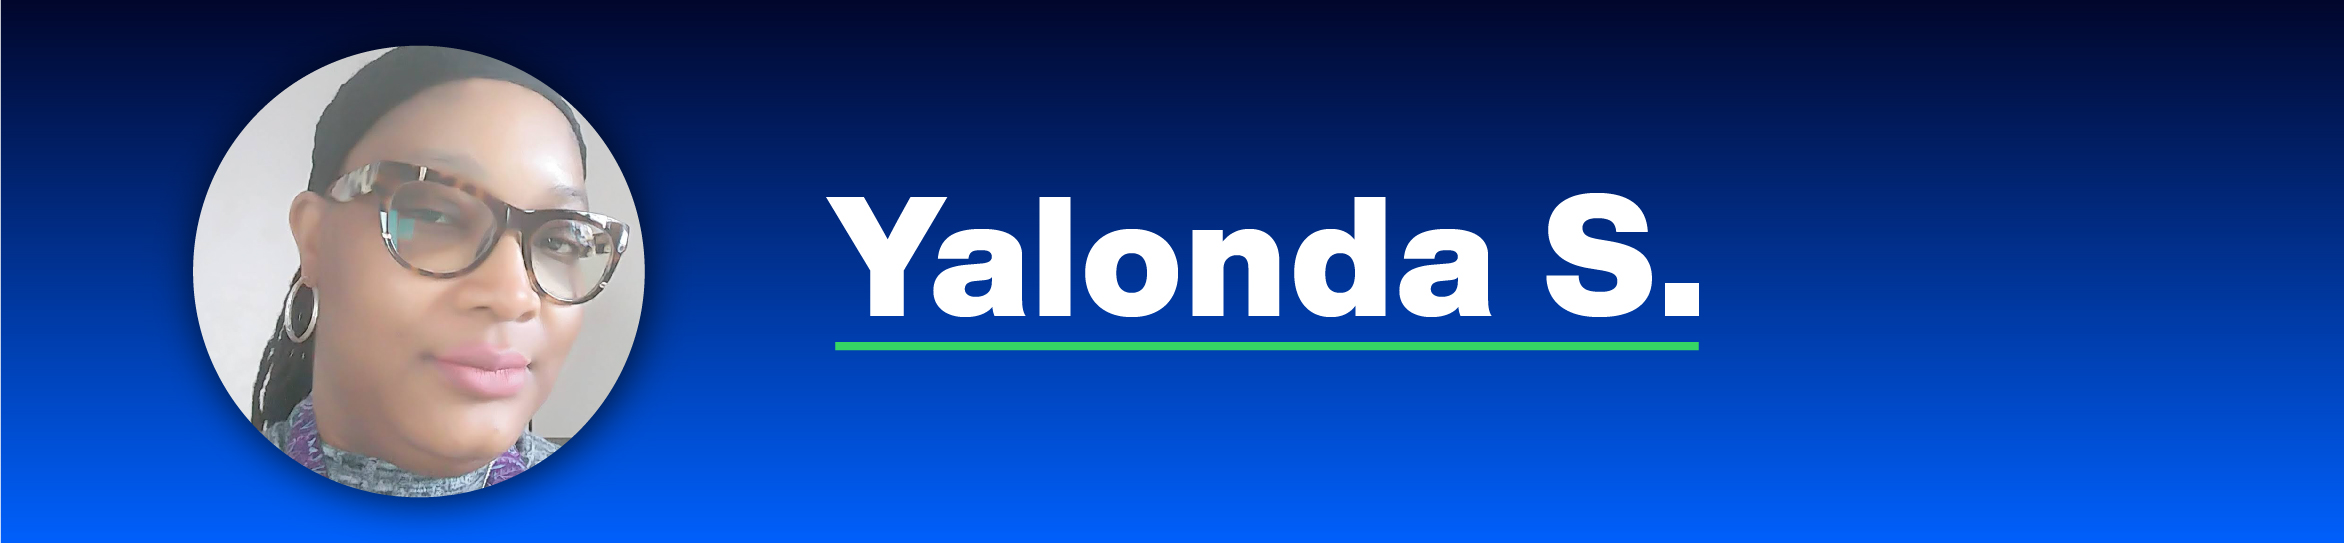 Yalonda_S_Member_Story-01.jpg